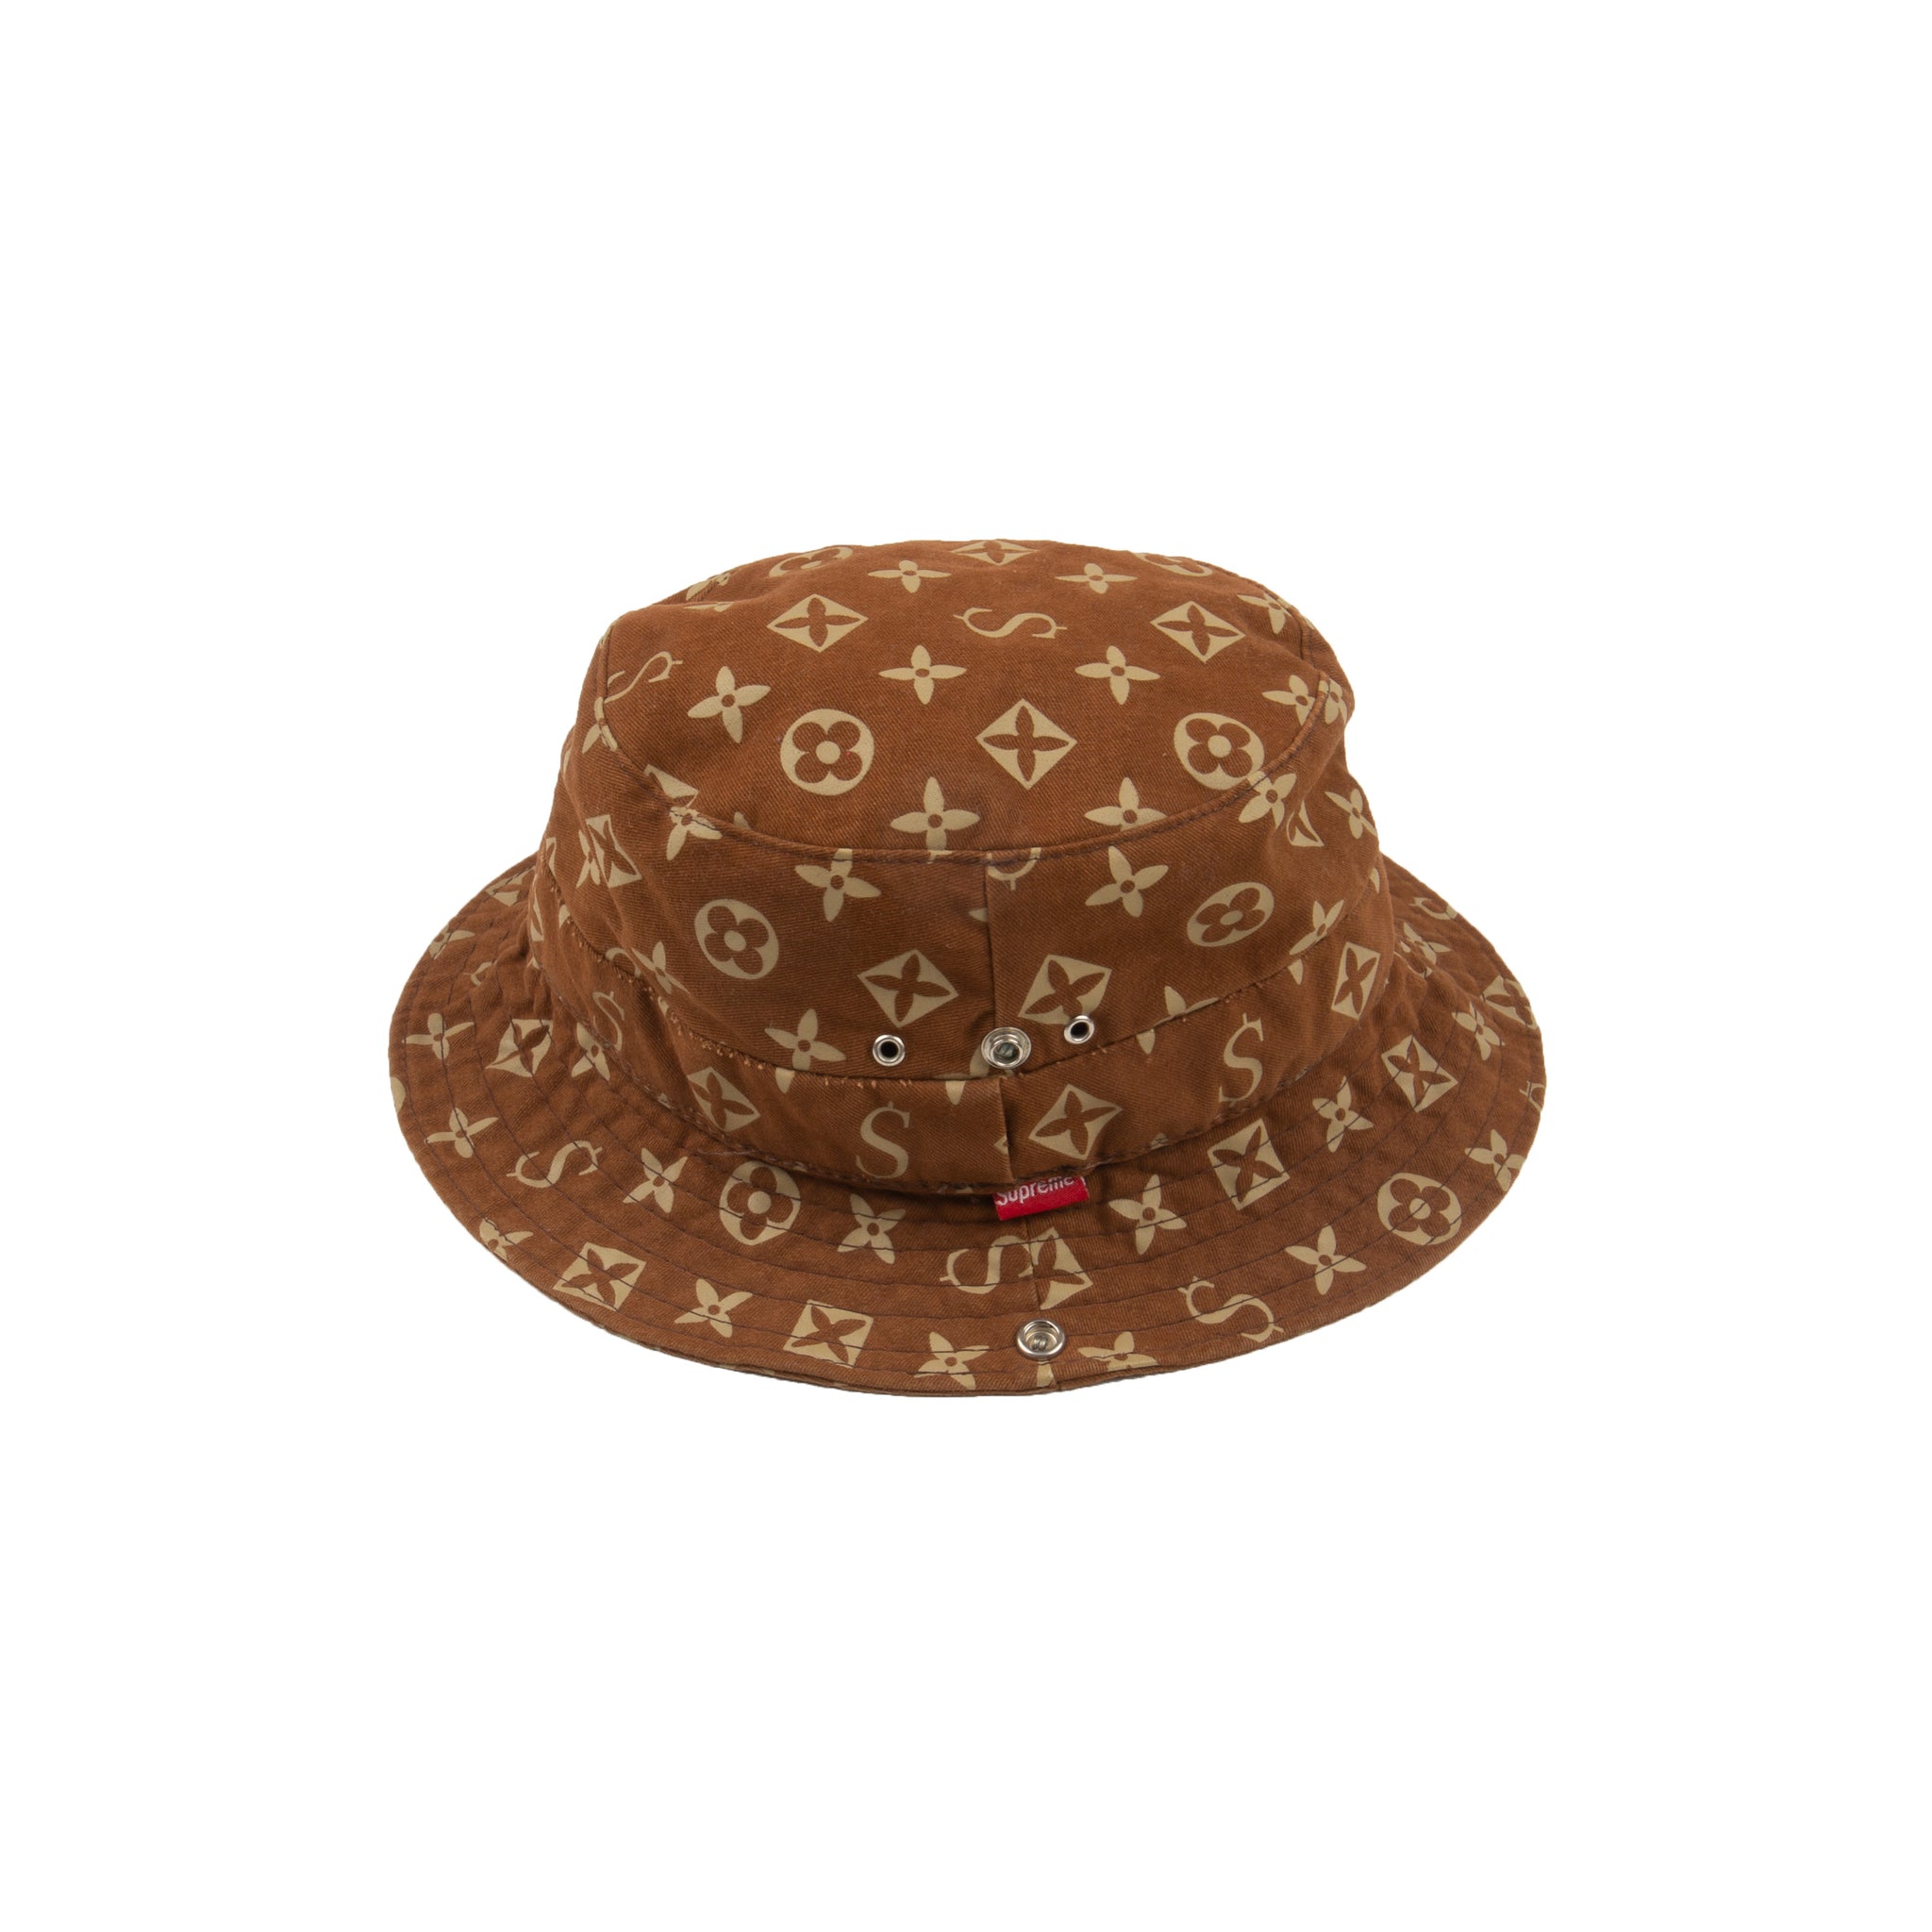 Lv Supreme Bucket Hat